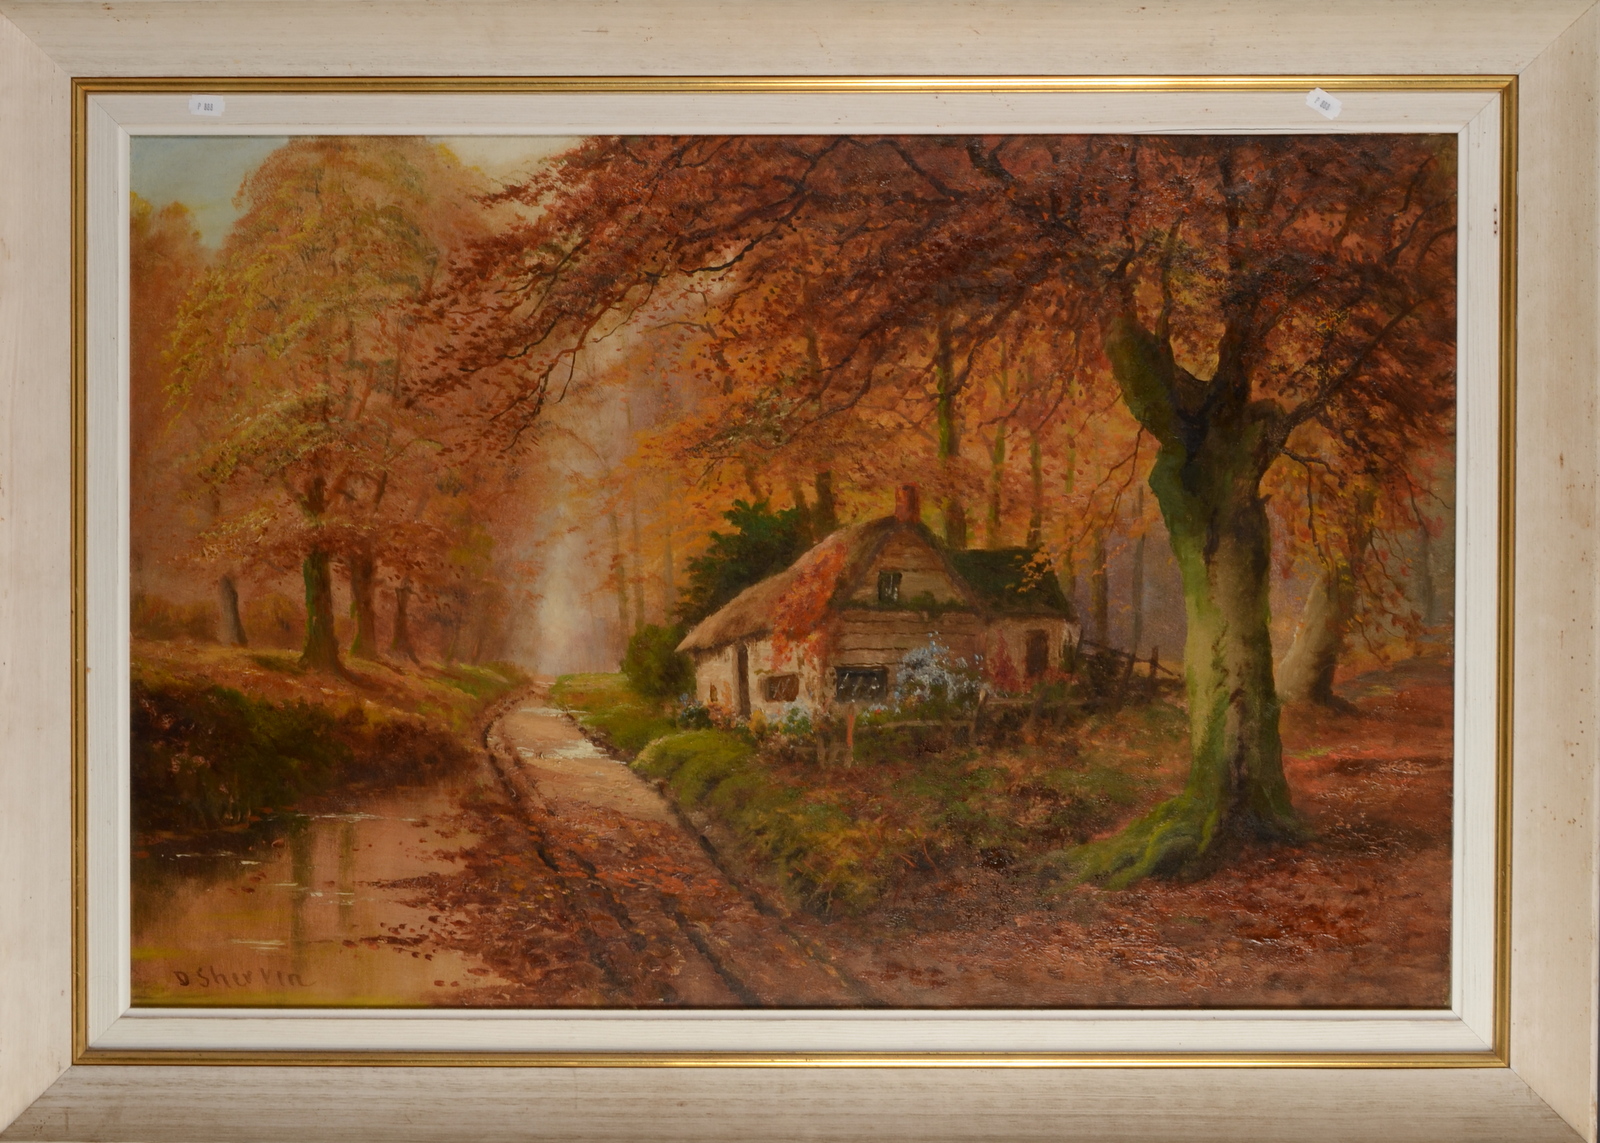 DANIEL SHERRIN Autumn Landscape Oil on canvas Signed 61 x 92cm - Image 2 of 2